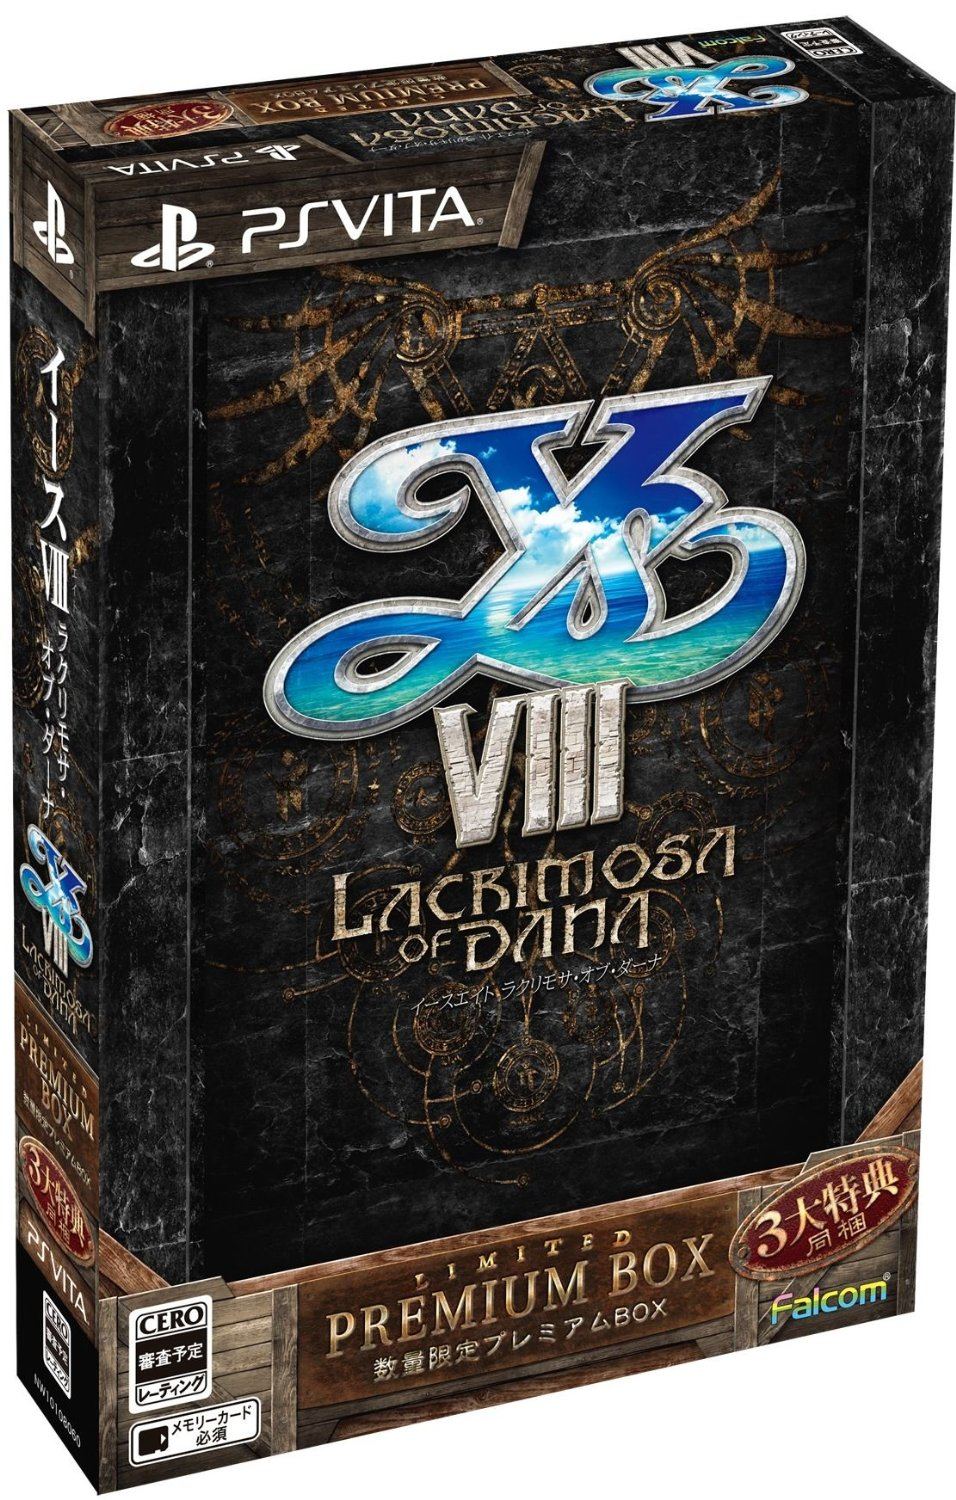 Ys VIII Lacrimosa of Dana [Premium Box] for PlayStation Vita